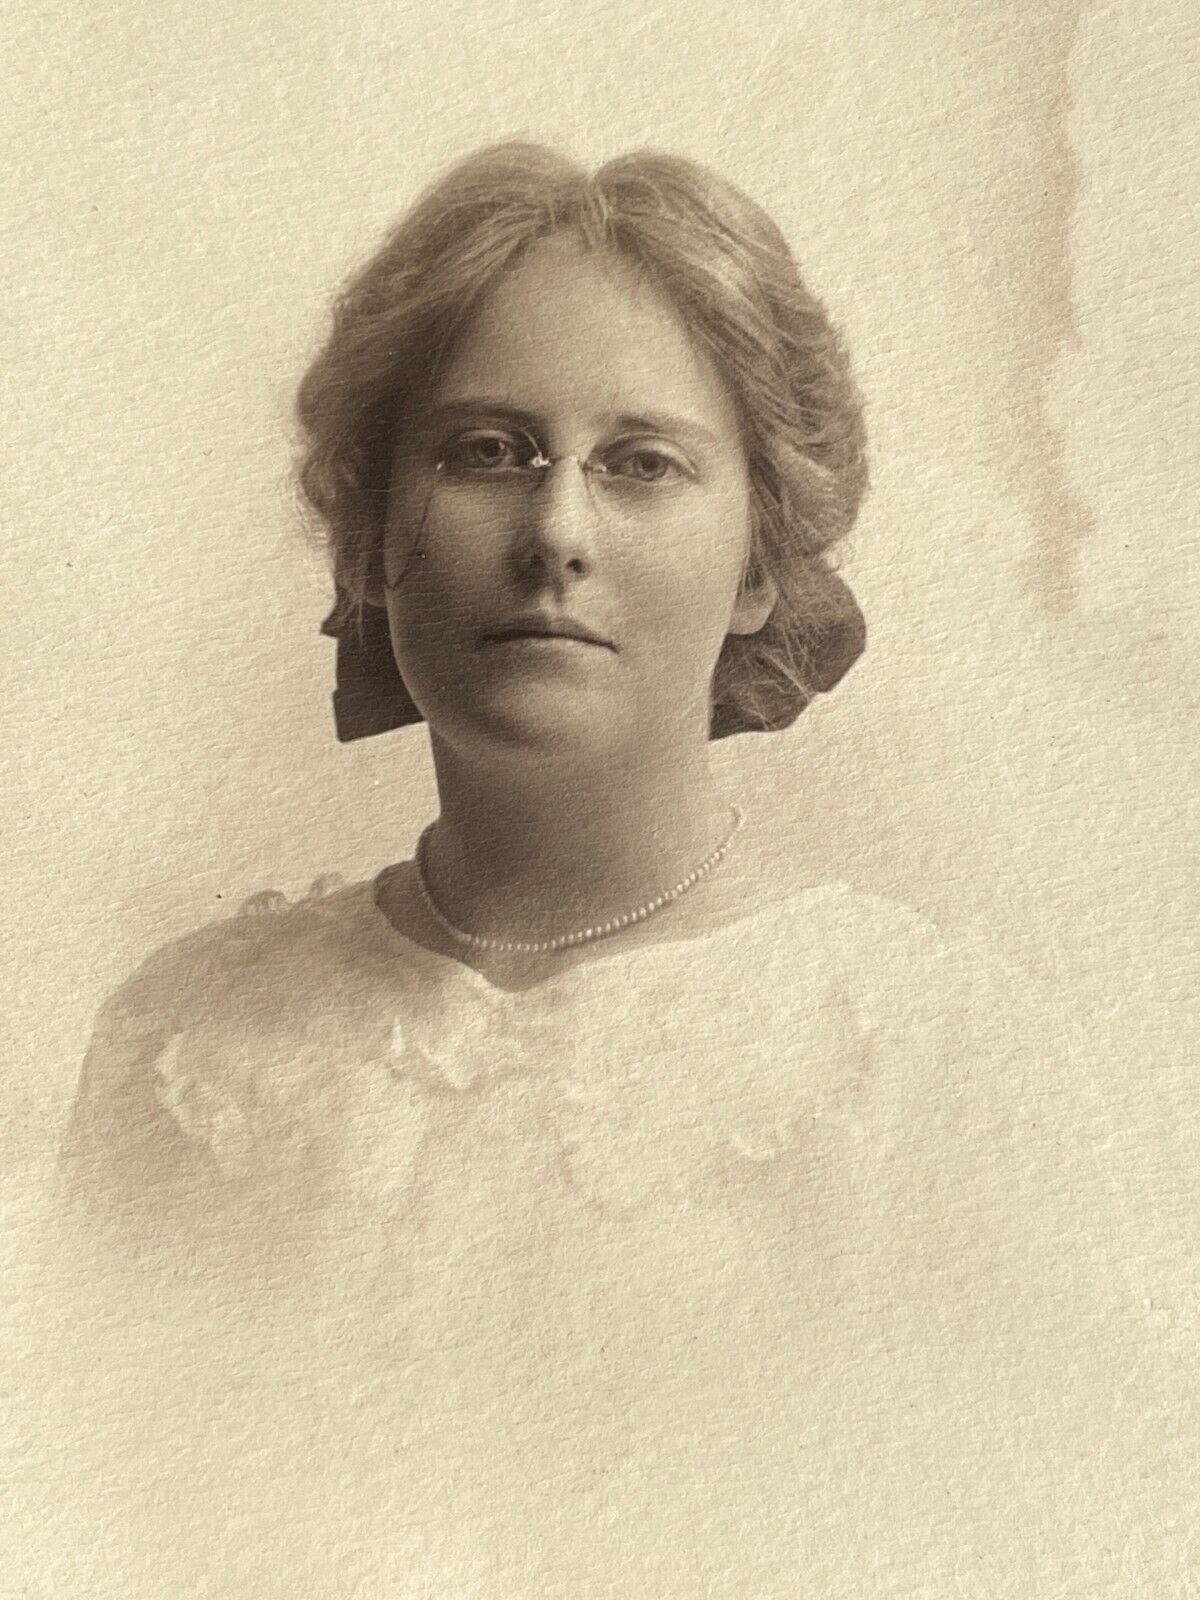 CG) Pretty Cute Woman Glasses Artistic White Dress Pearl Necklace NY Vassar 1915